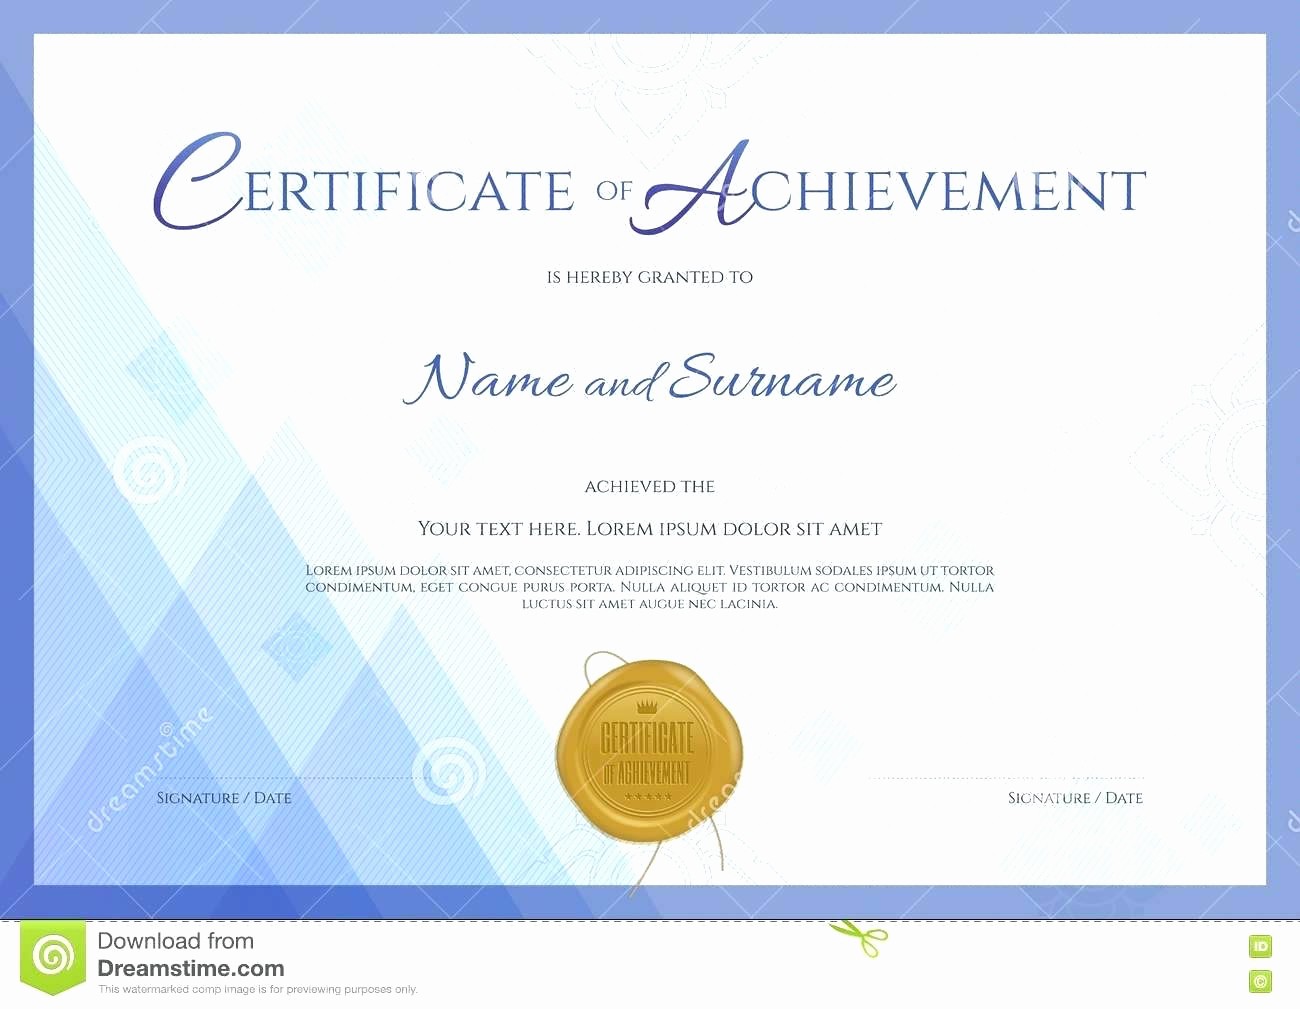 Certificate Of Achievement Free Template Awesome Template Certificate Achievement Template